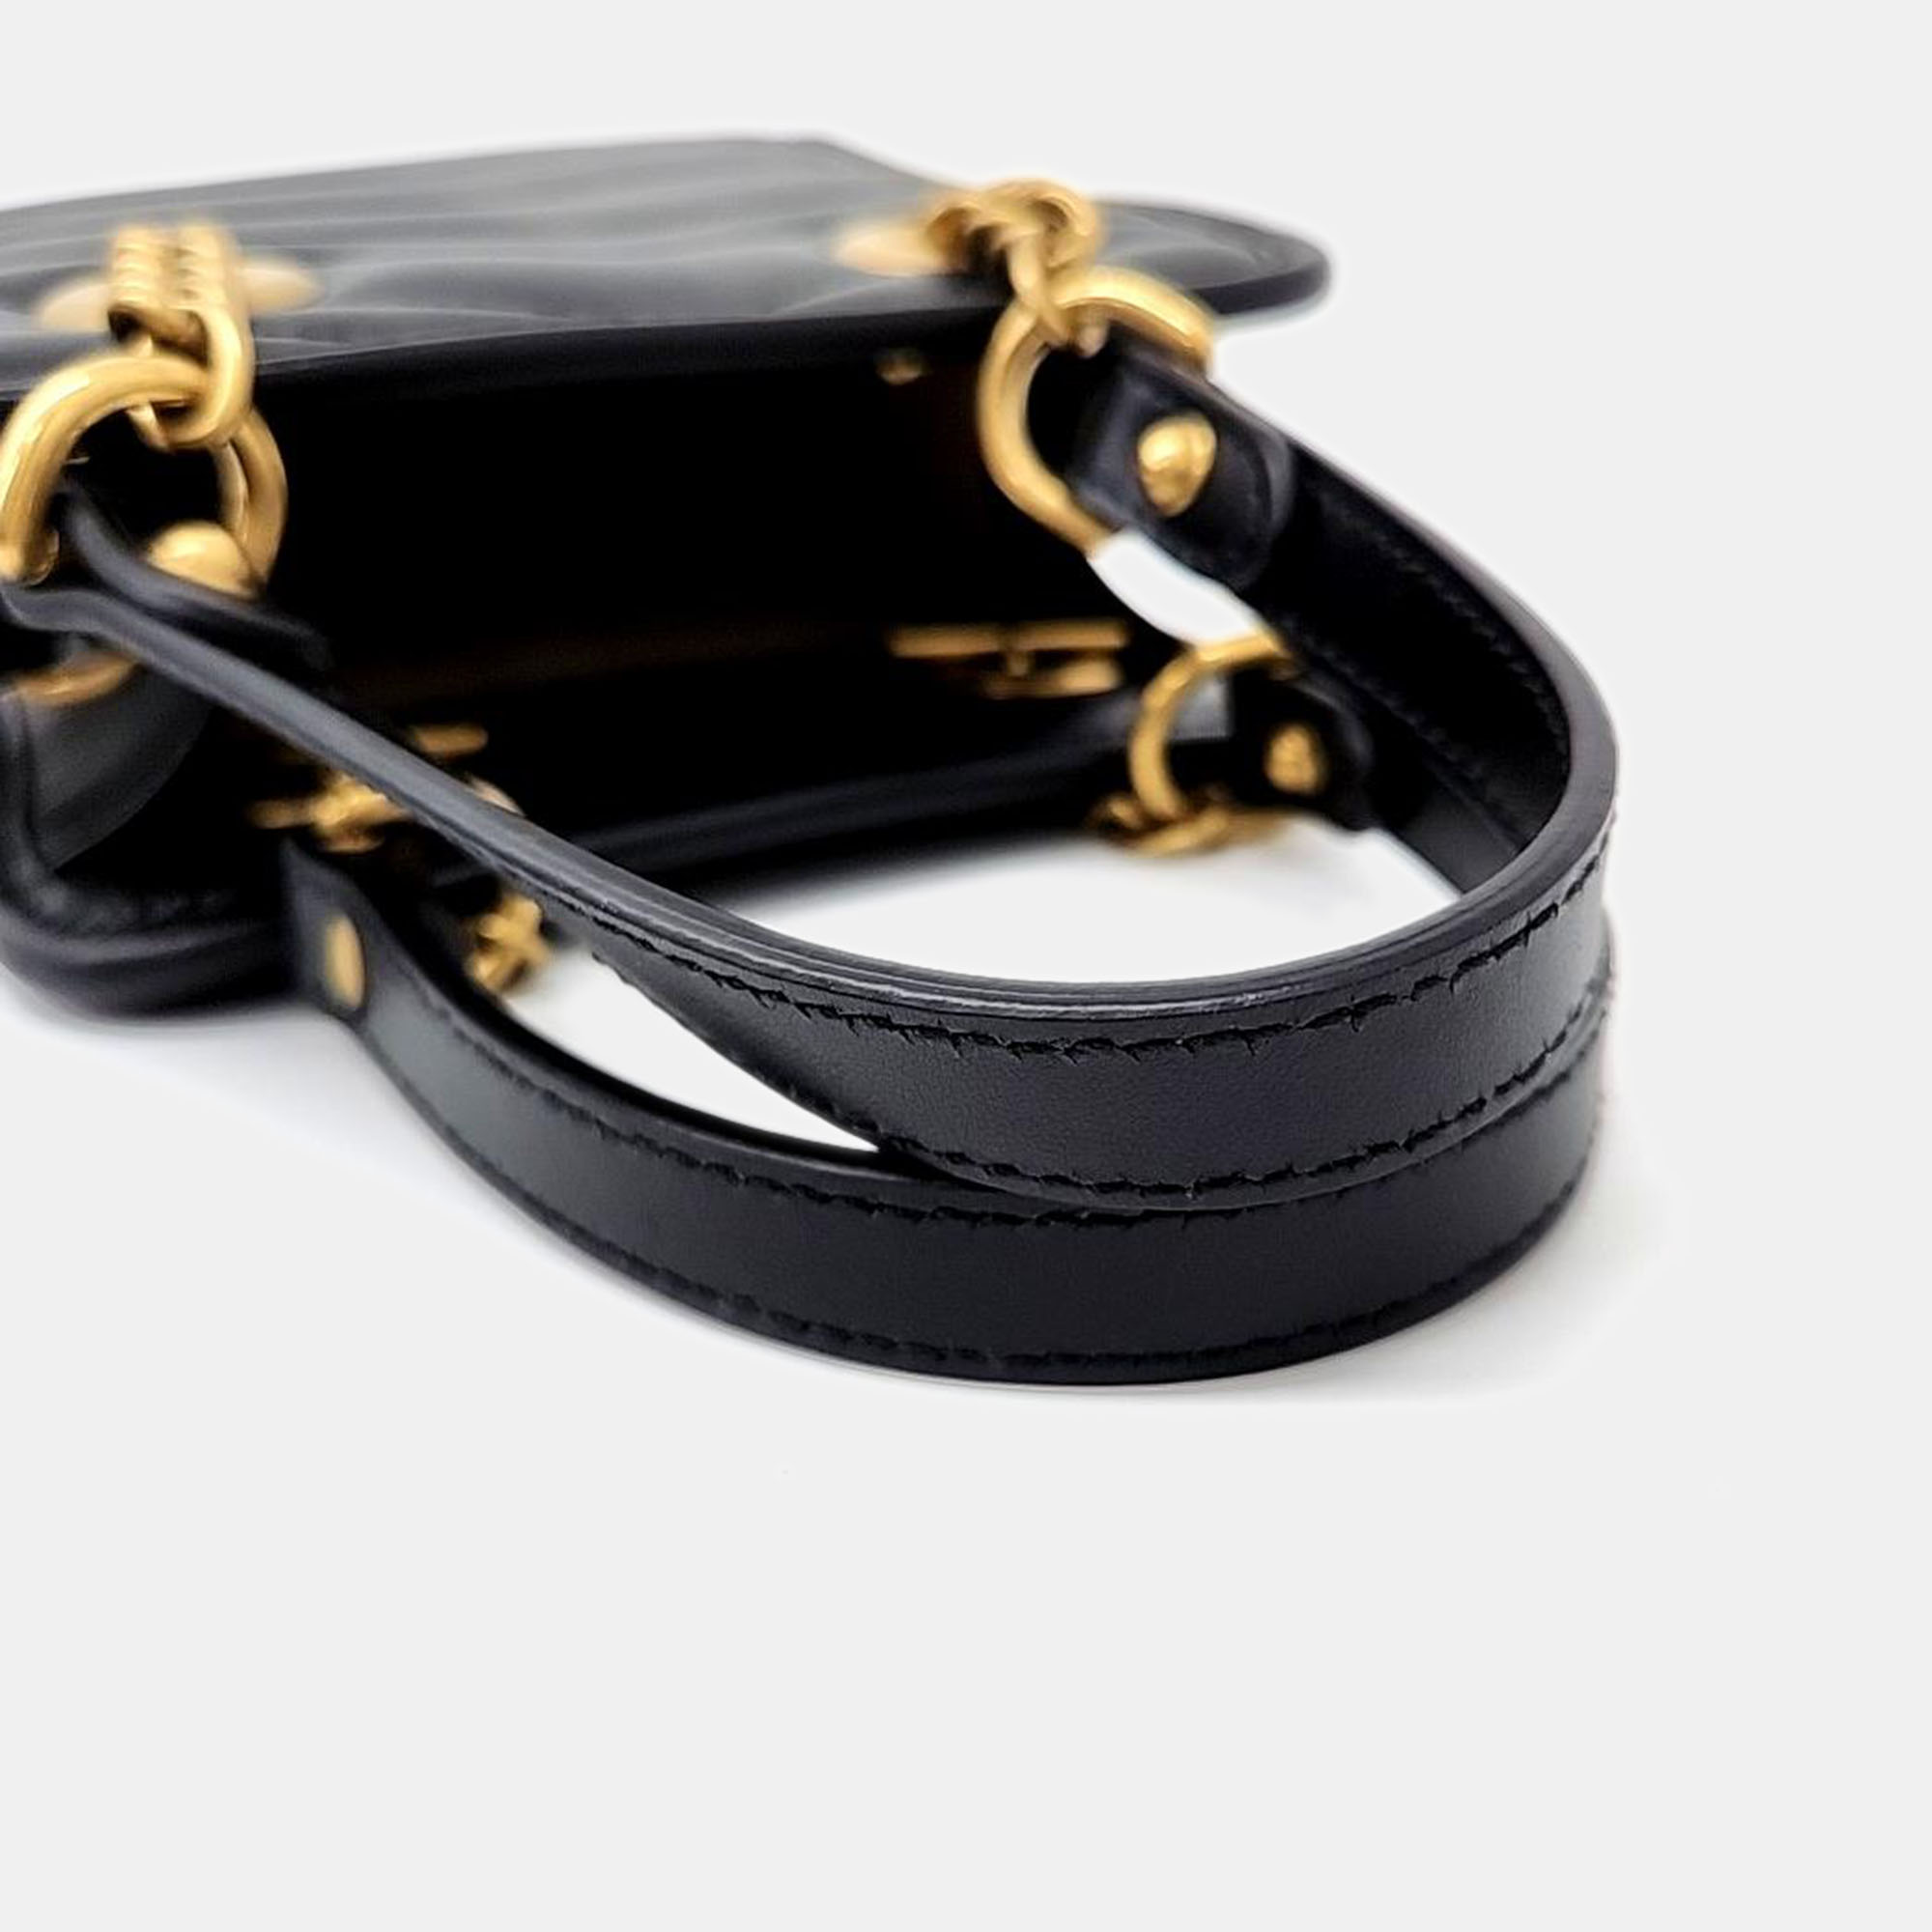 Gucci GG Marmont Matelasse Mini Bag (696123) Bag